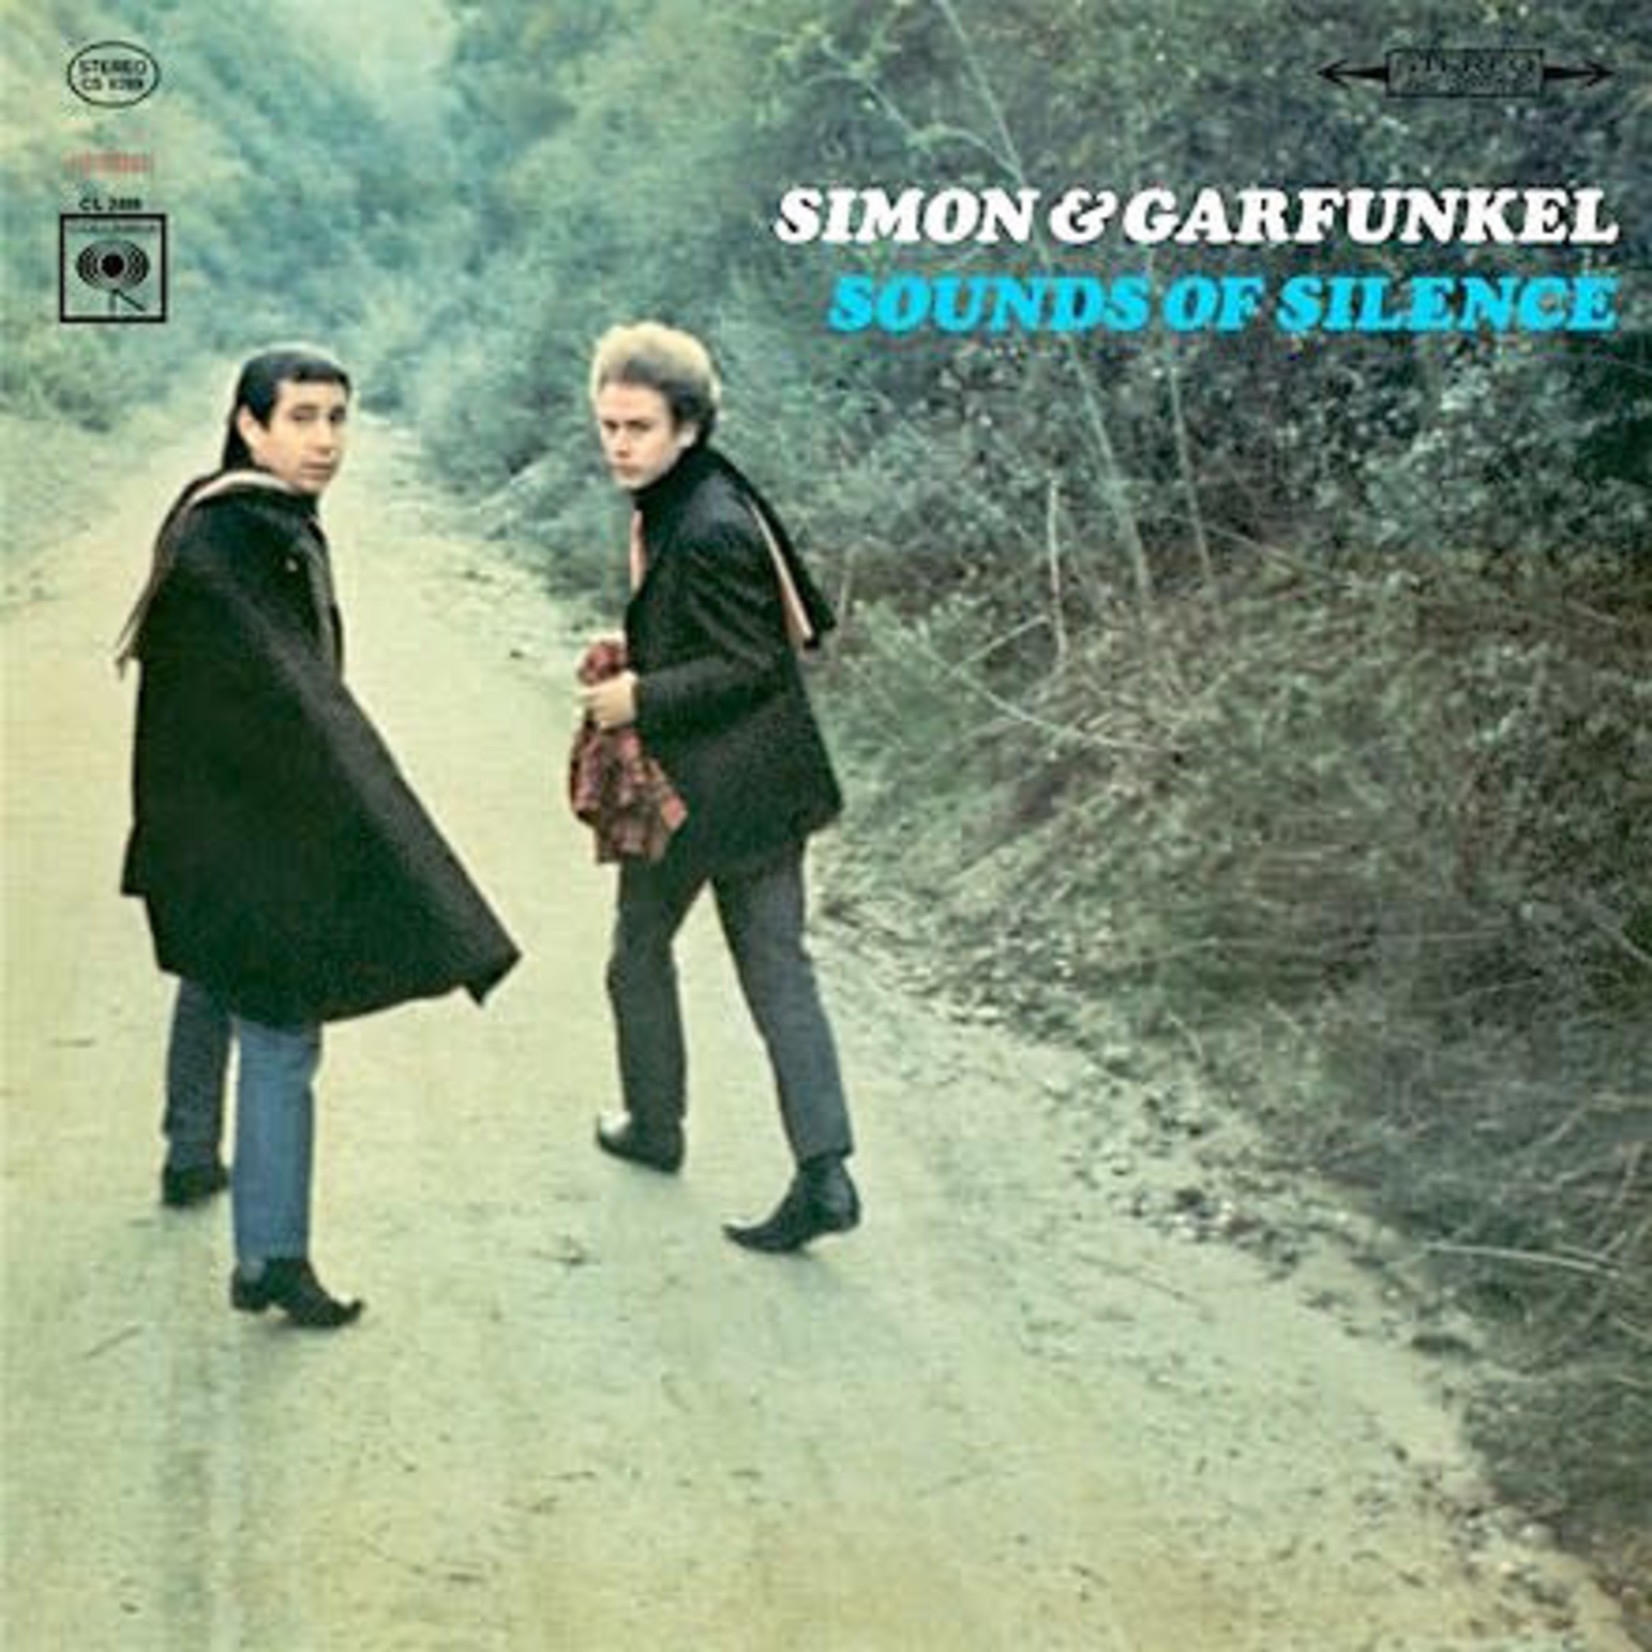 [New] Paul Simon & Art Garfunkel - Sounds of Silence (European Ed.)